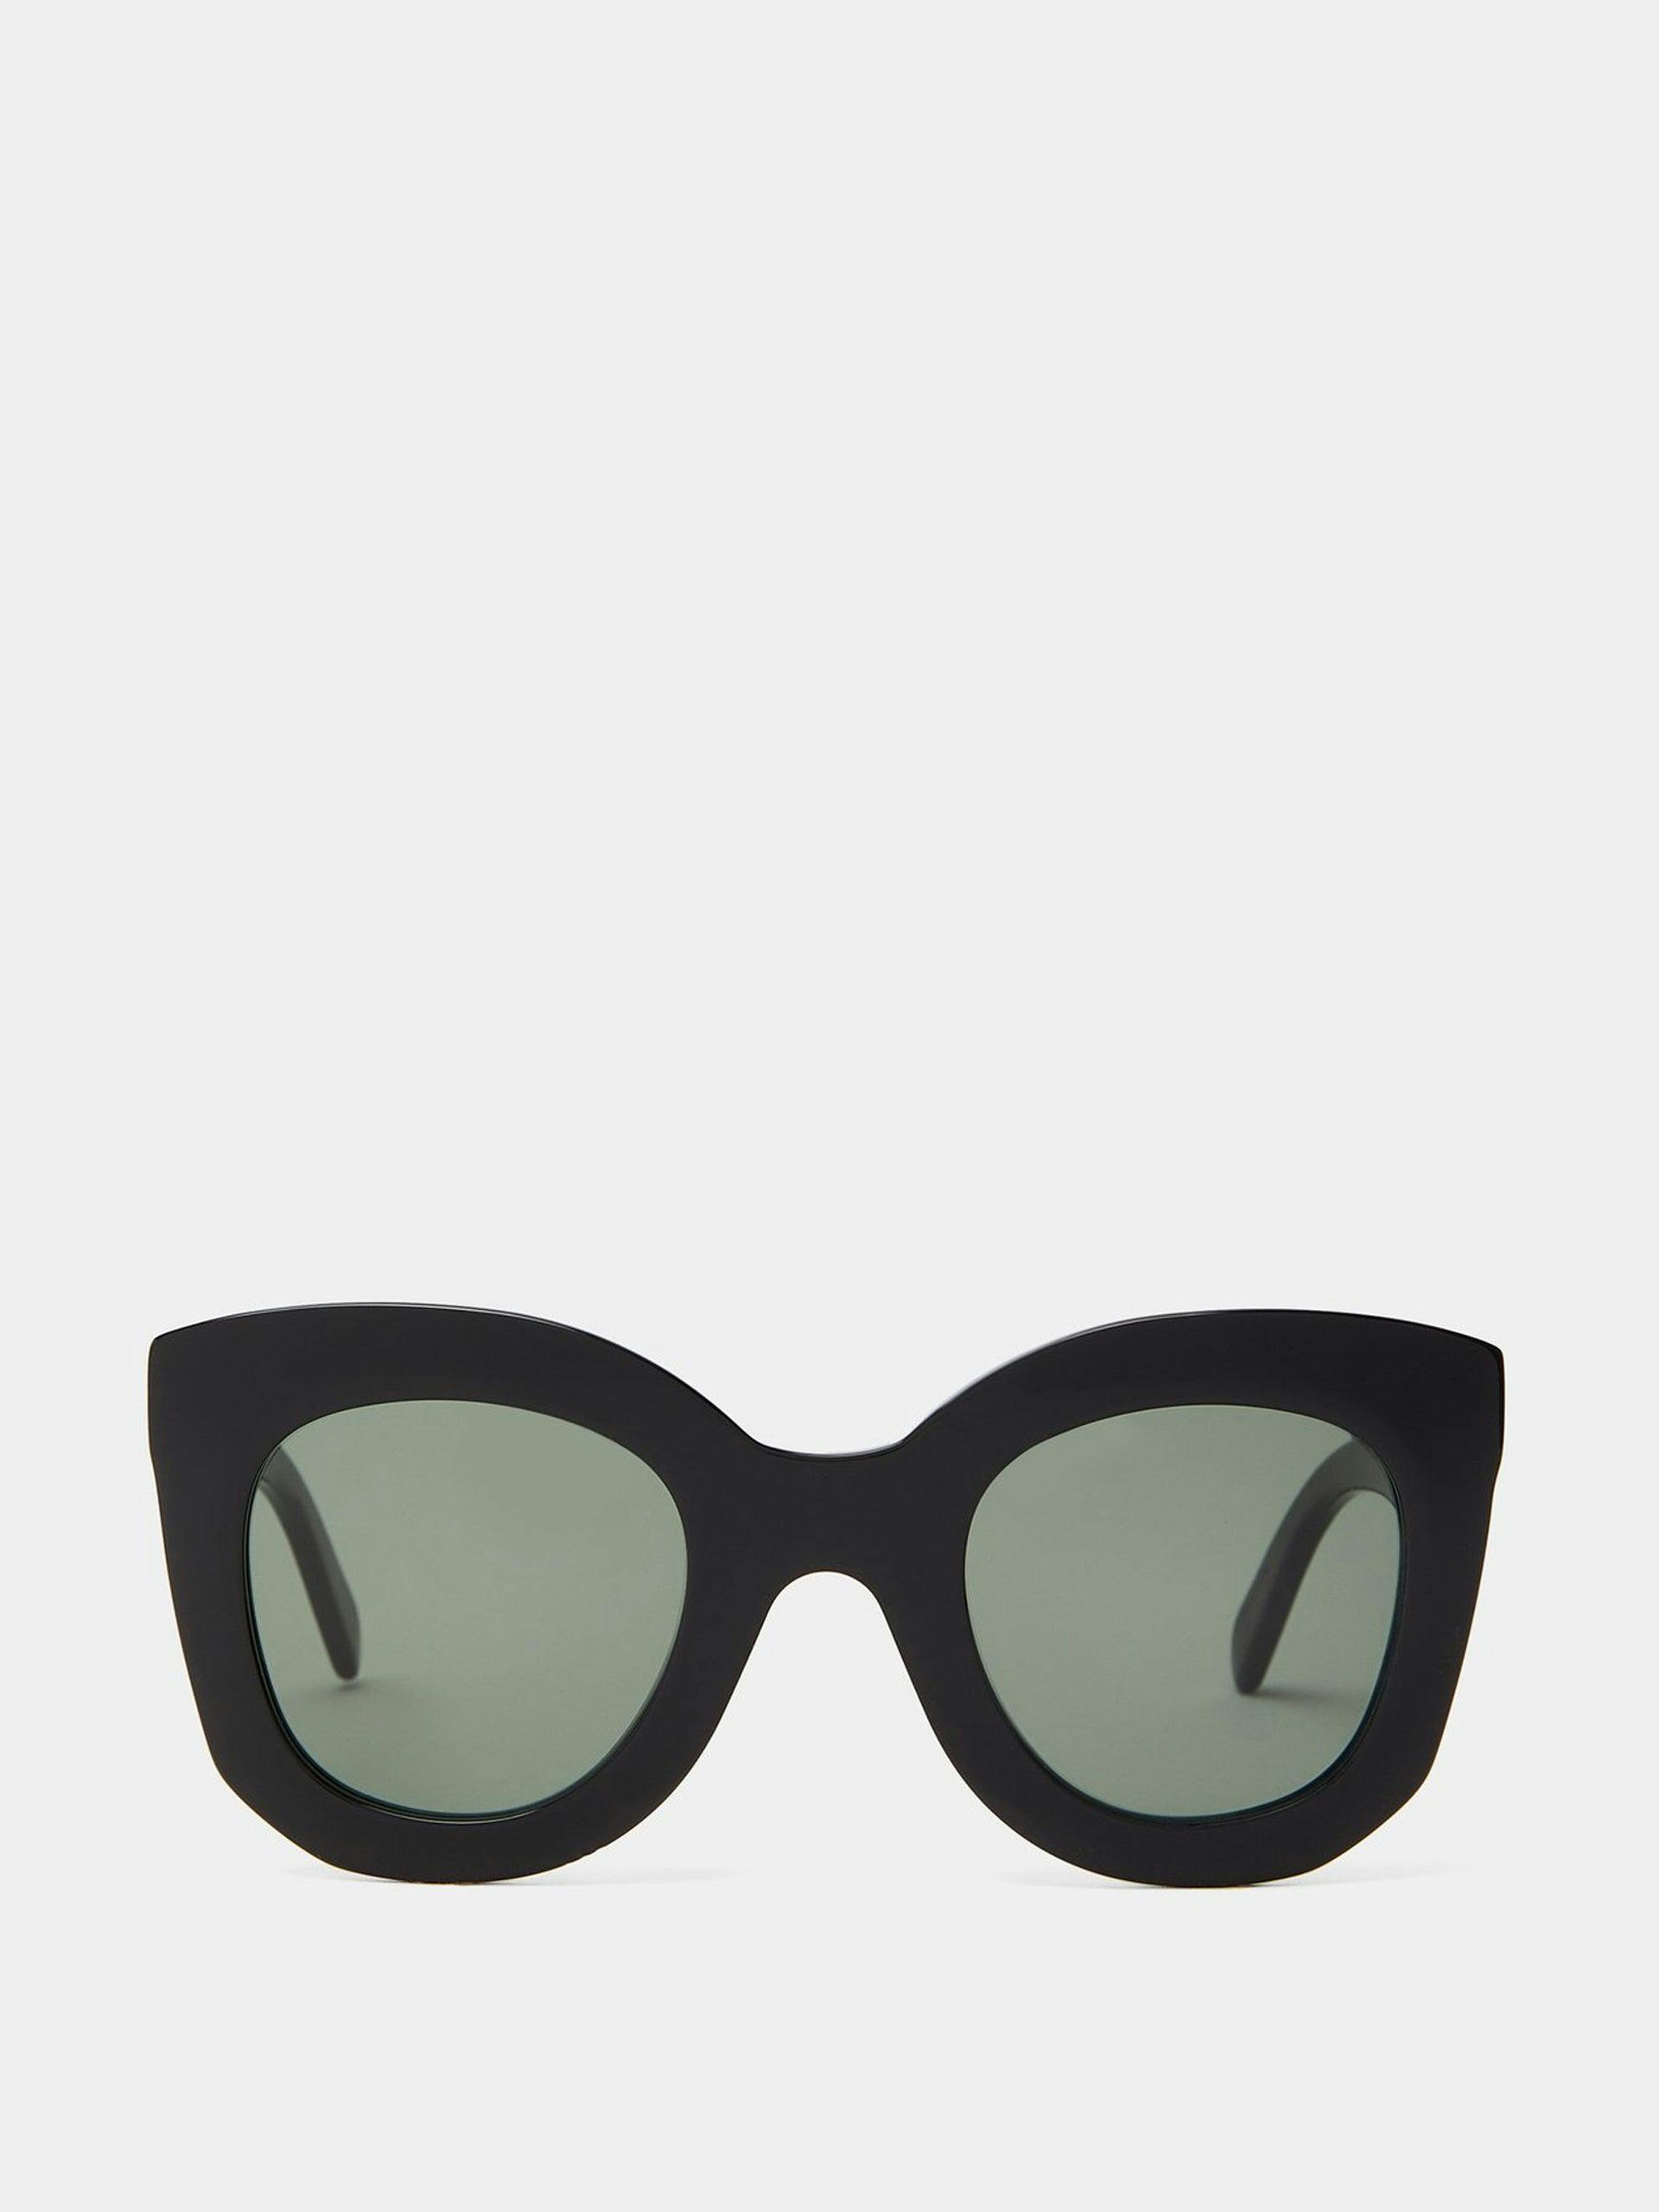 Black oversized round acetate sunglasses